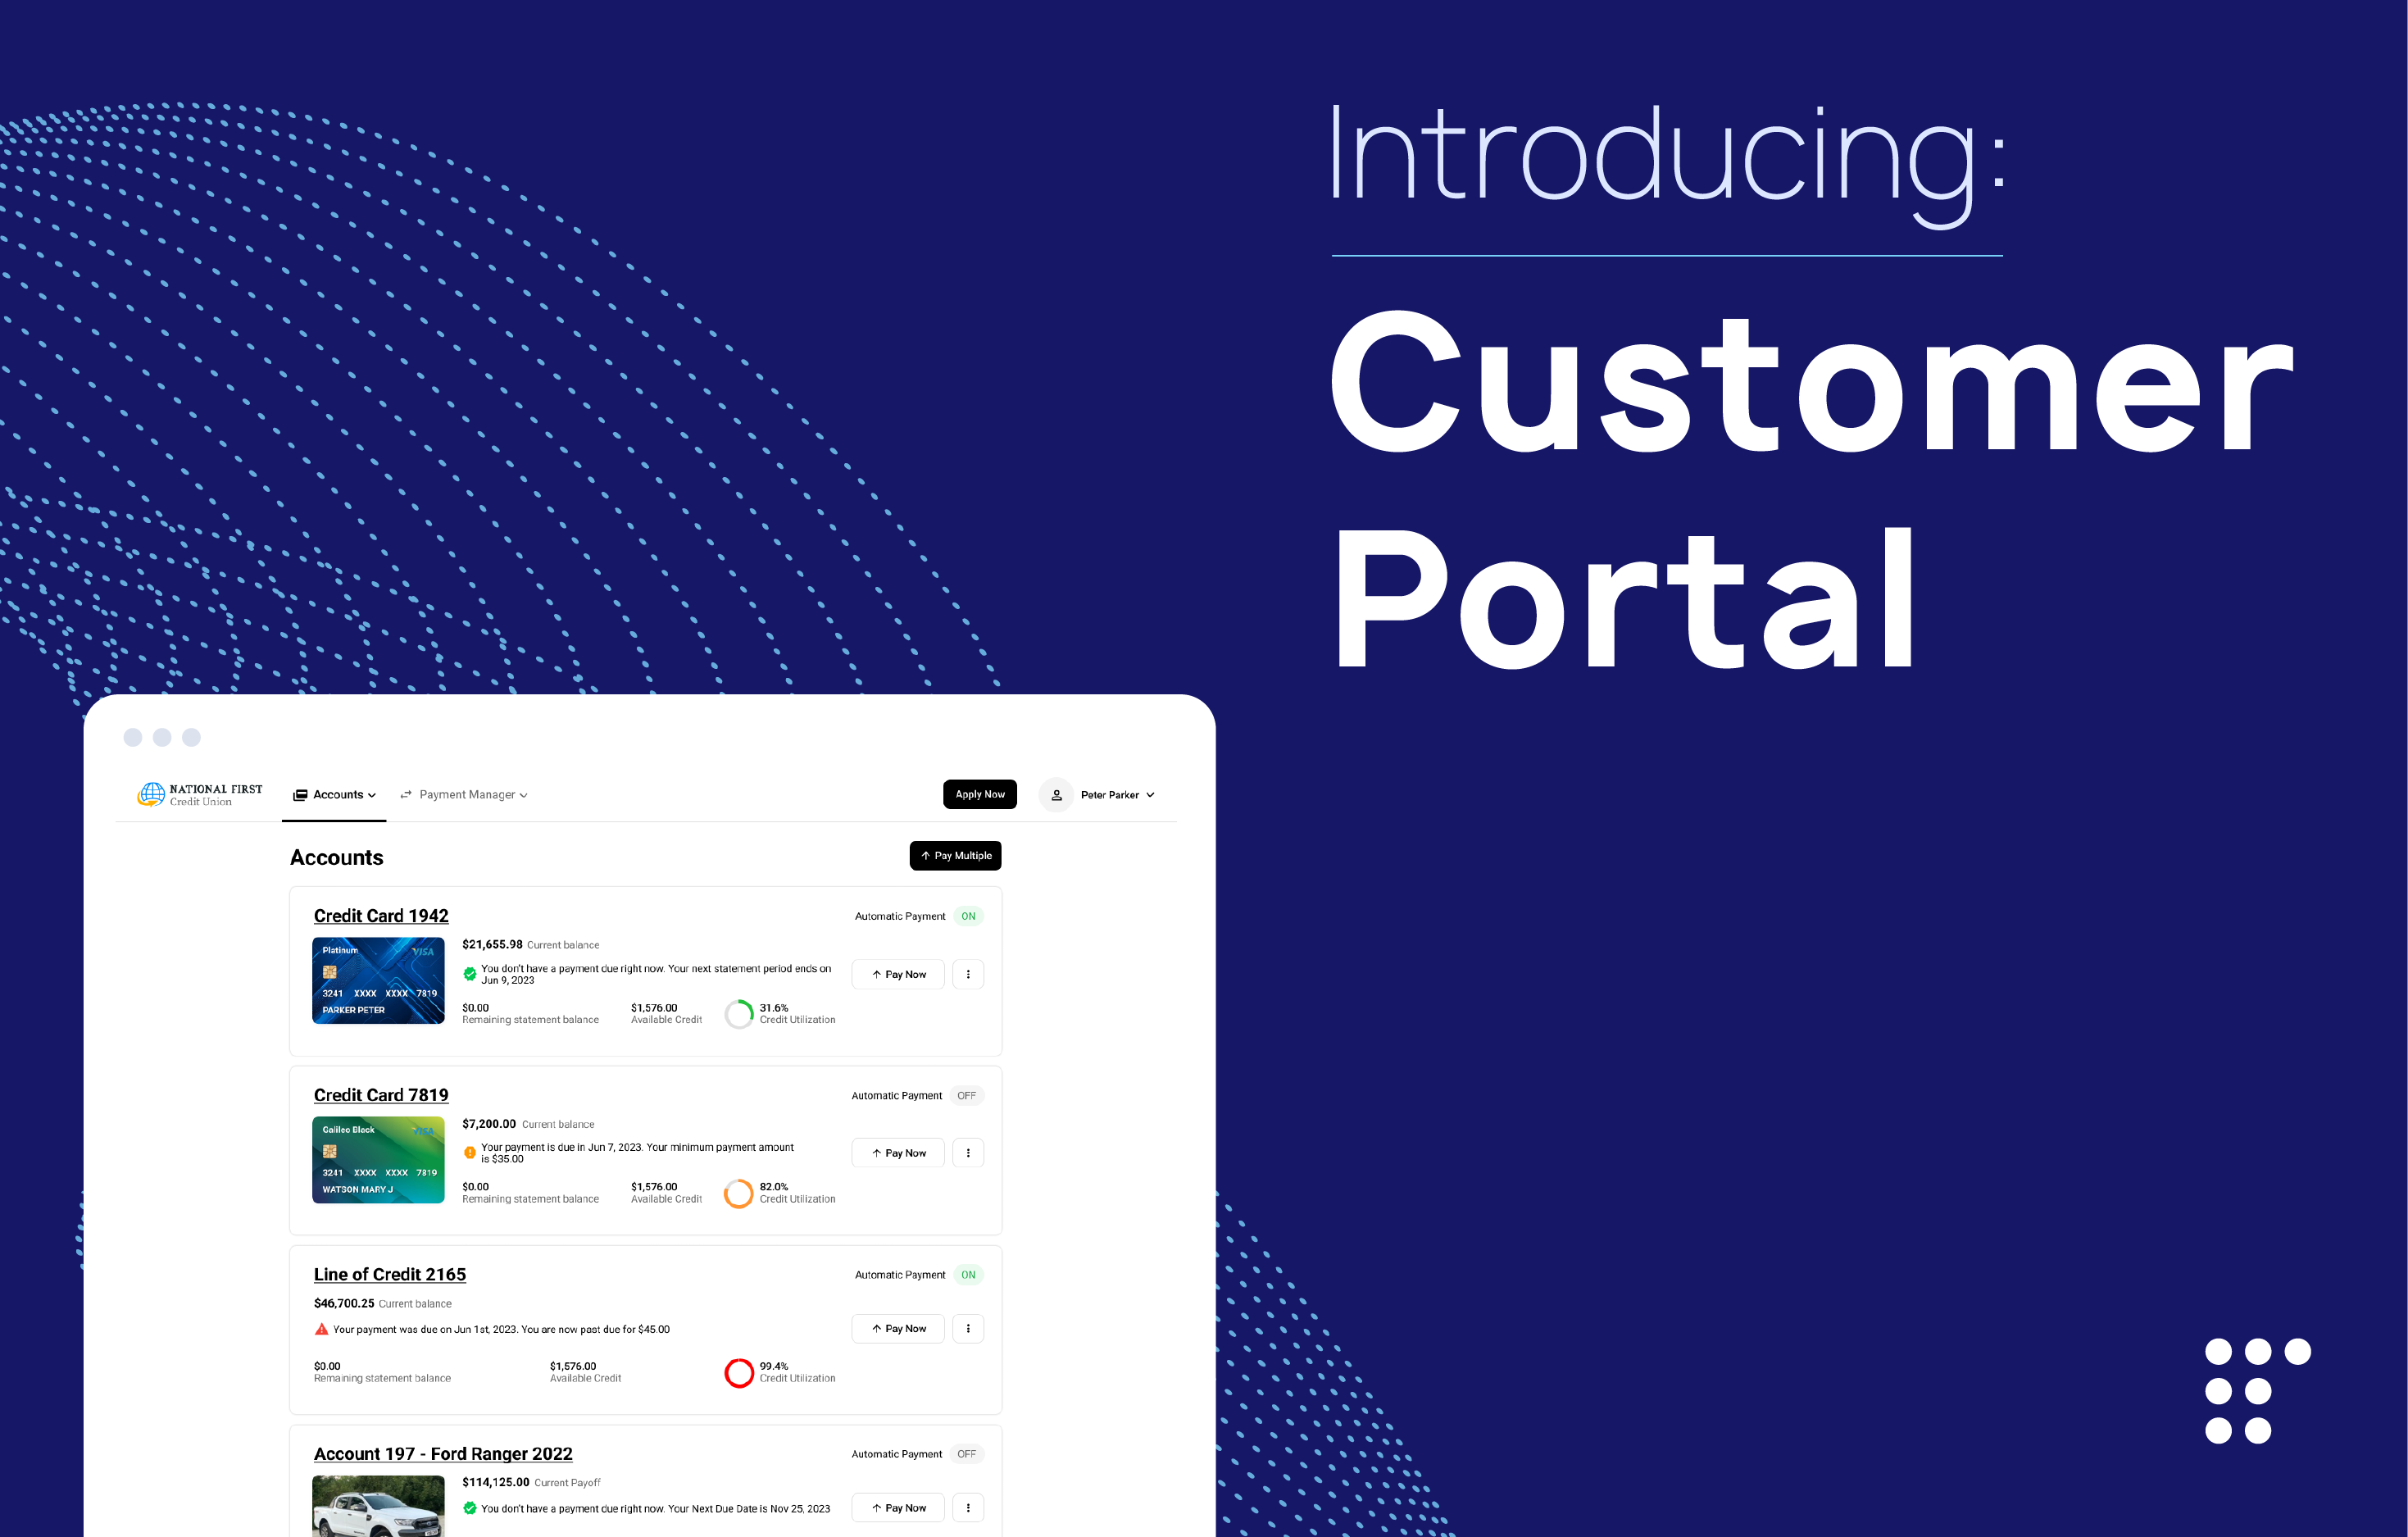 Game-changing self-serve options through LoanPro’s customer portal